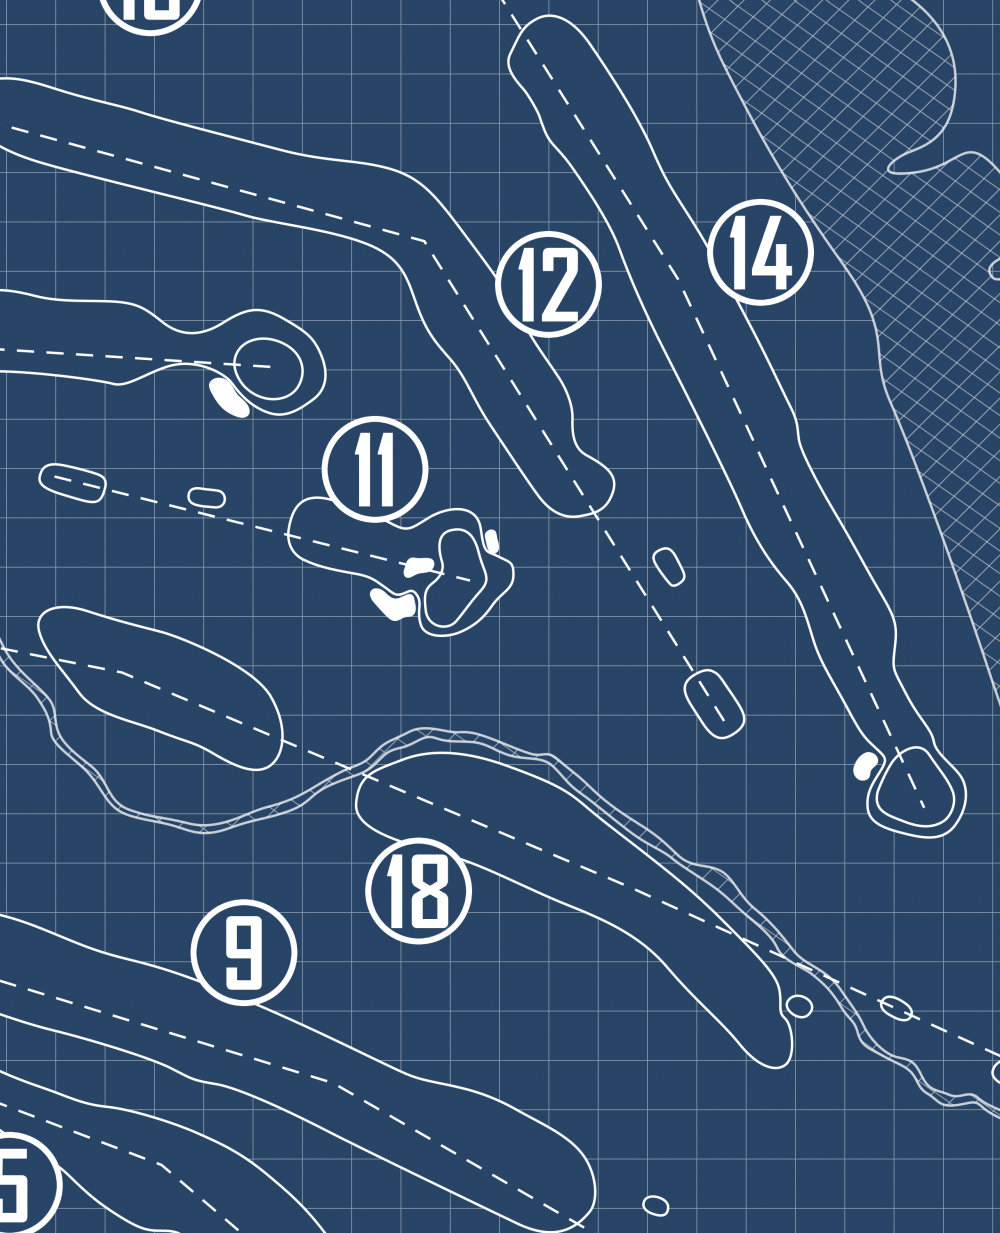 Castle Pines Golf Club Blueprint (Print)